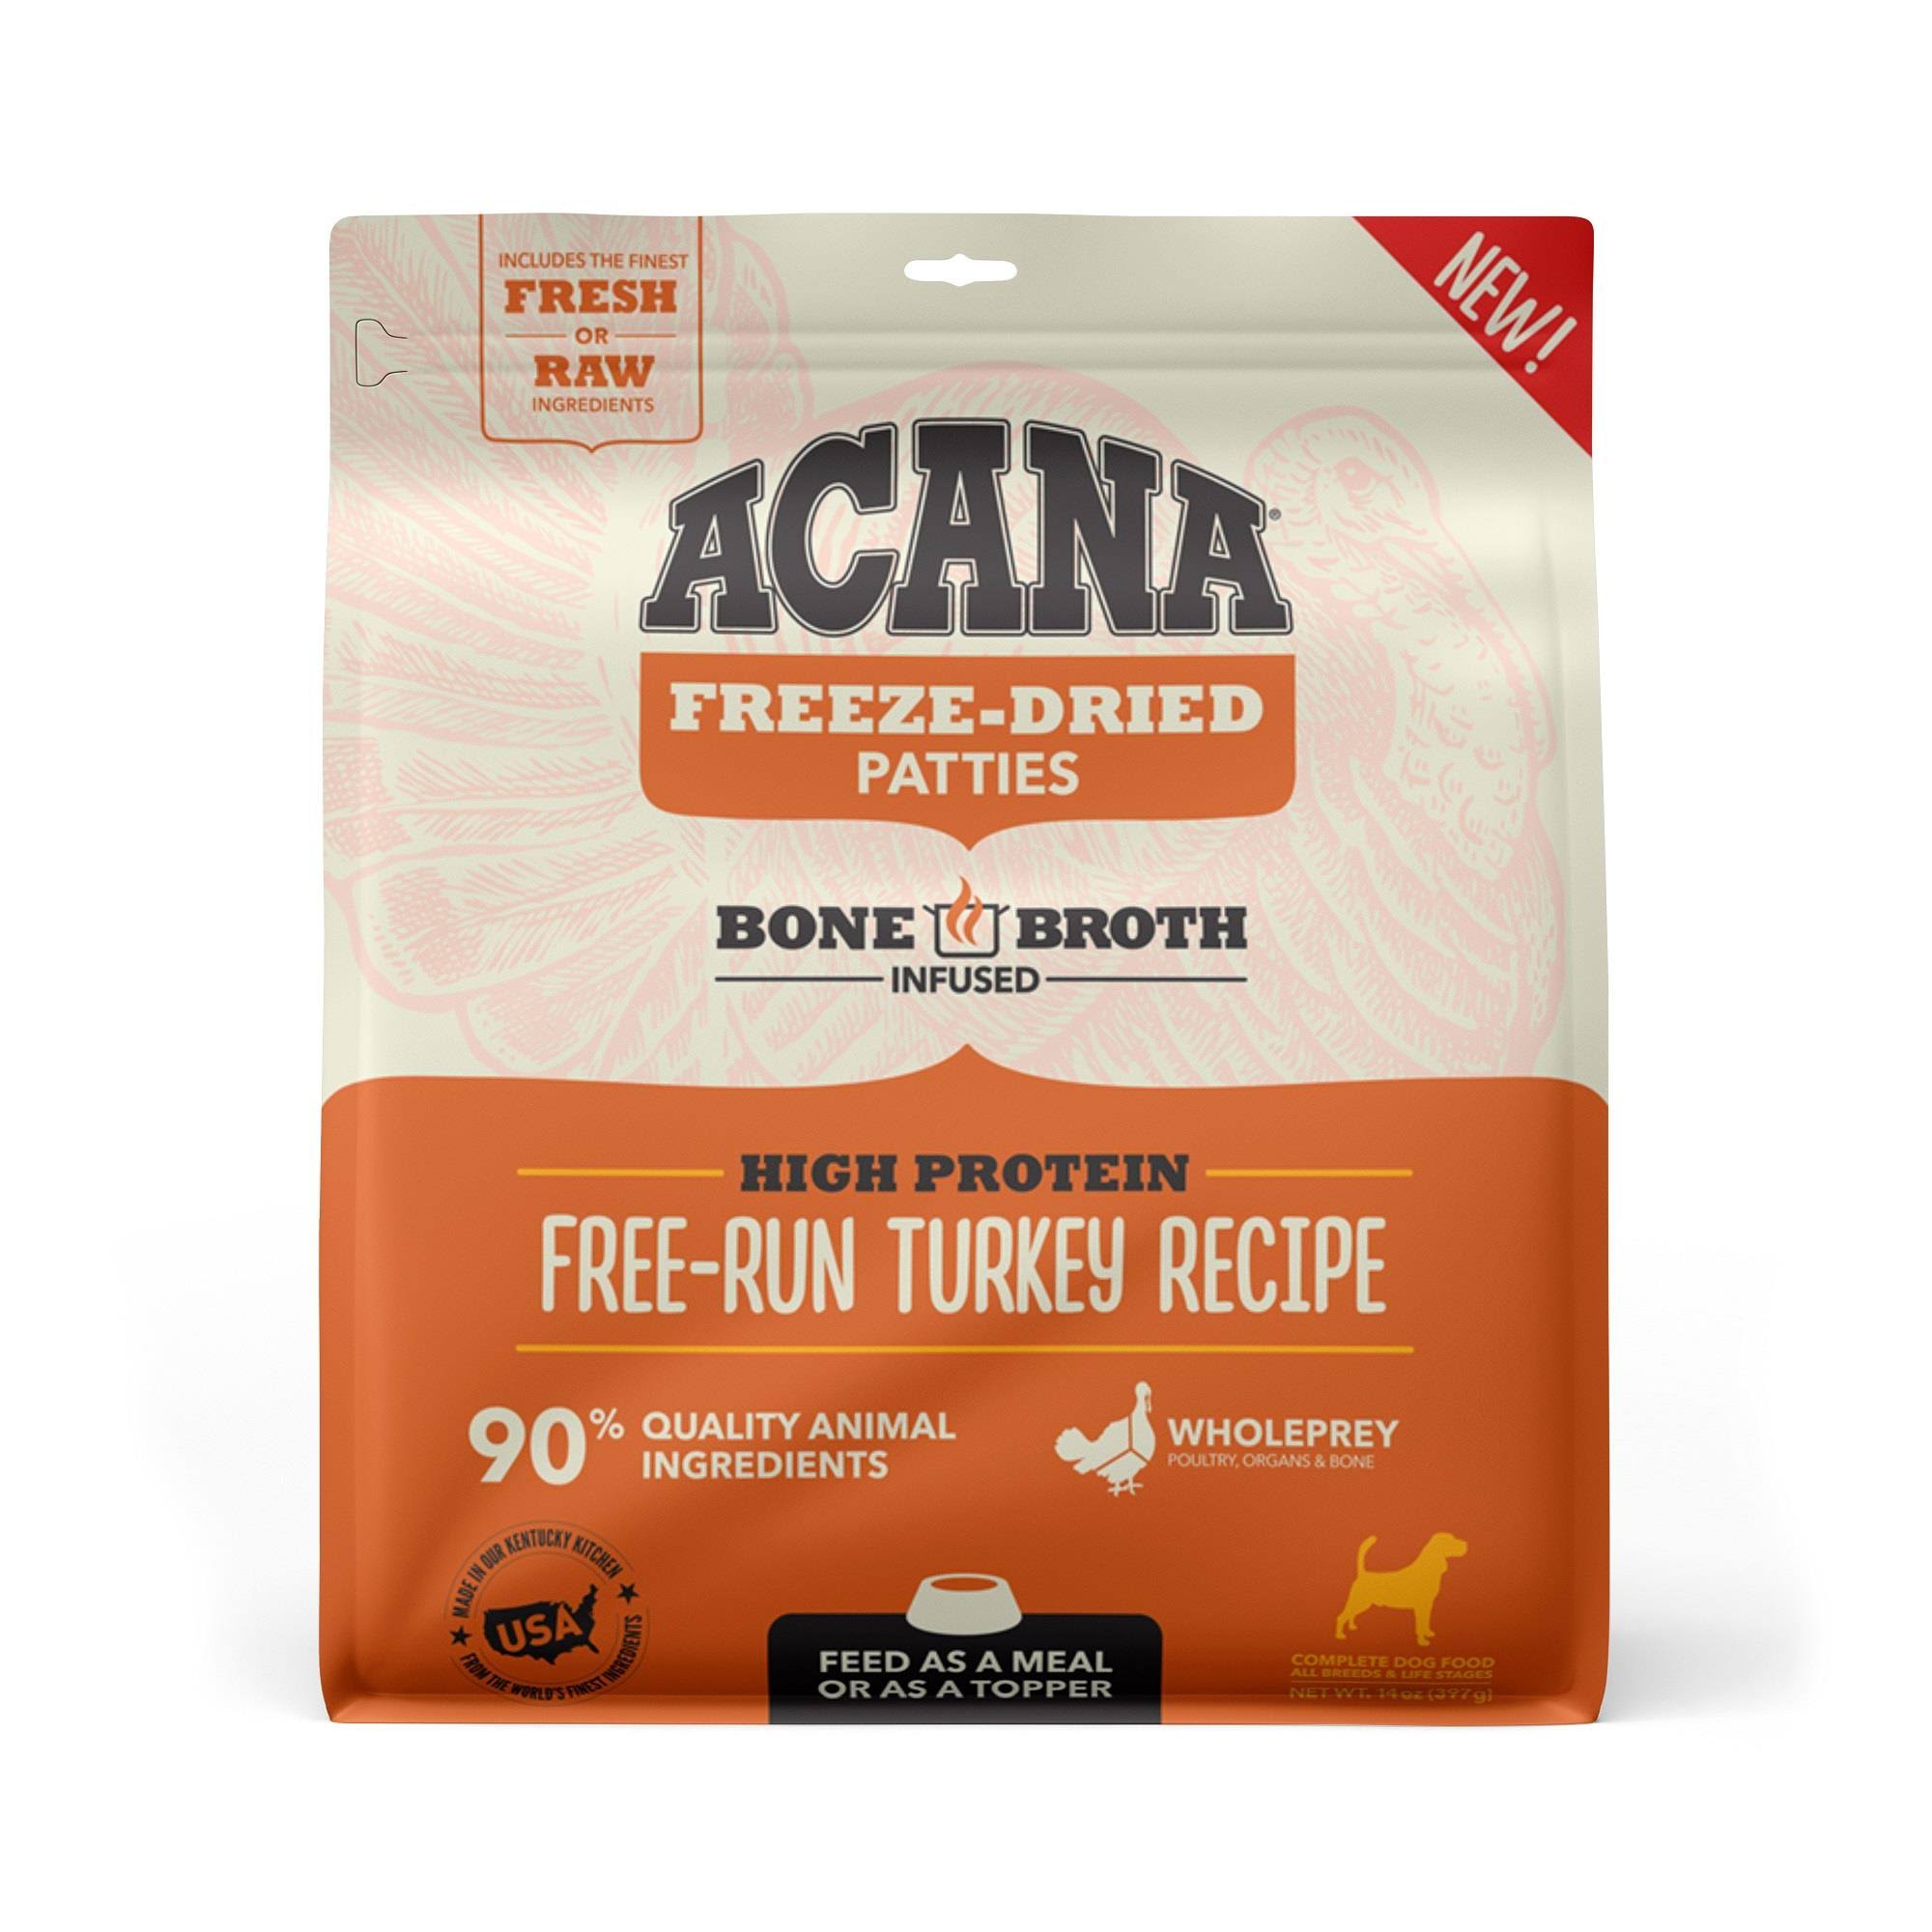 Acana Freeze-Dried Patties Dog Food - Free-Run Turkey Recipe - 14 oz. Bag